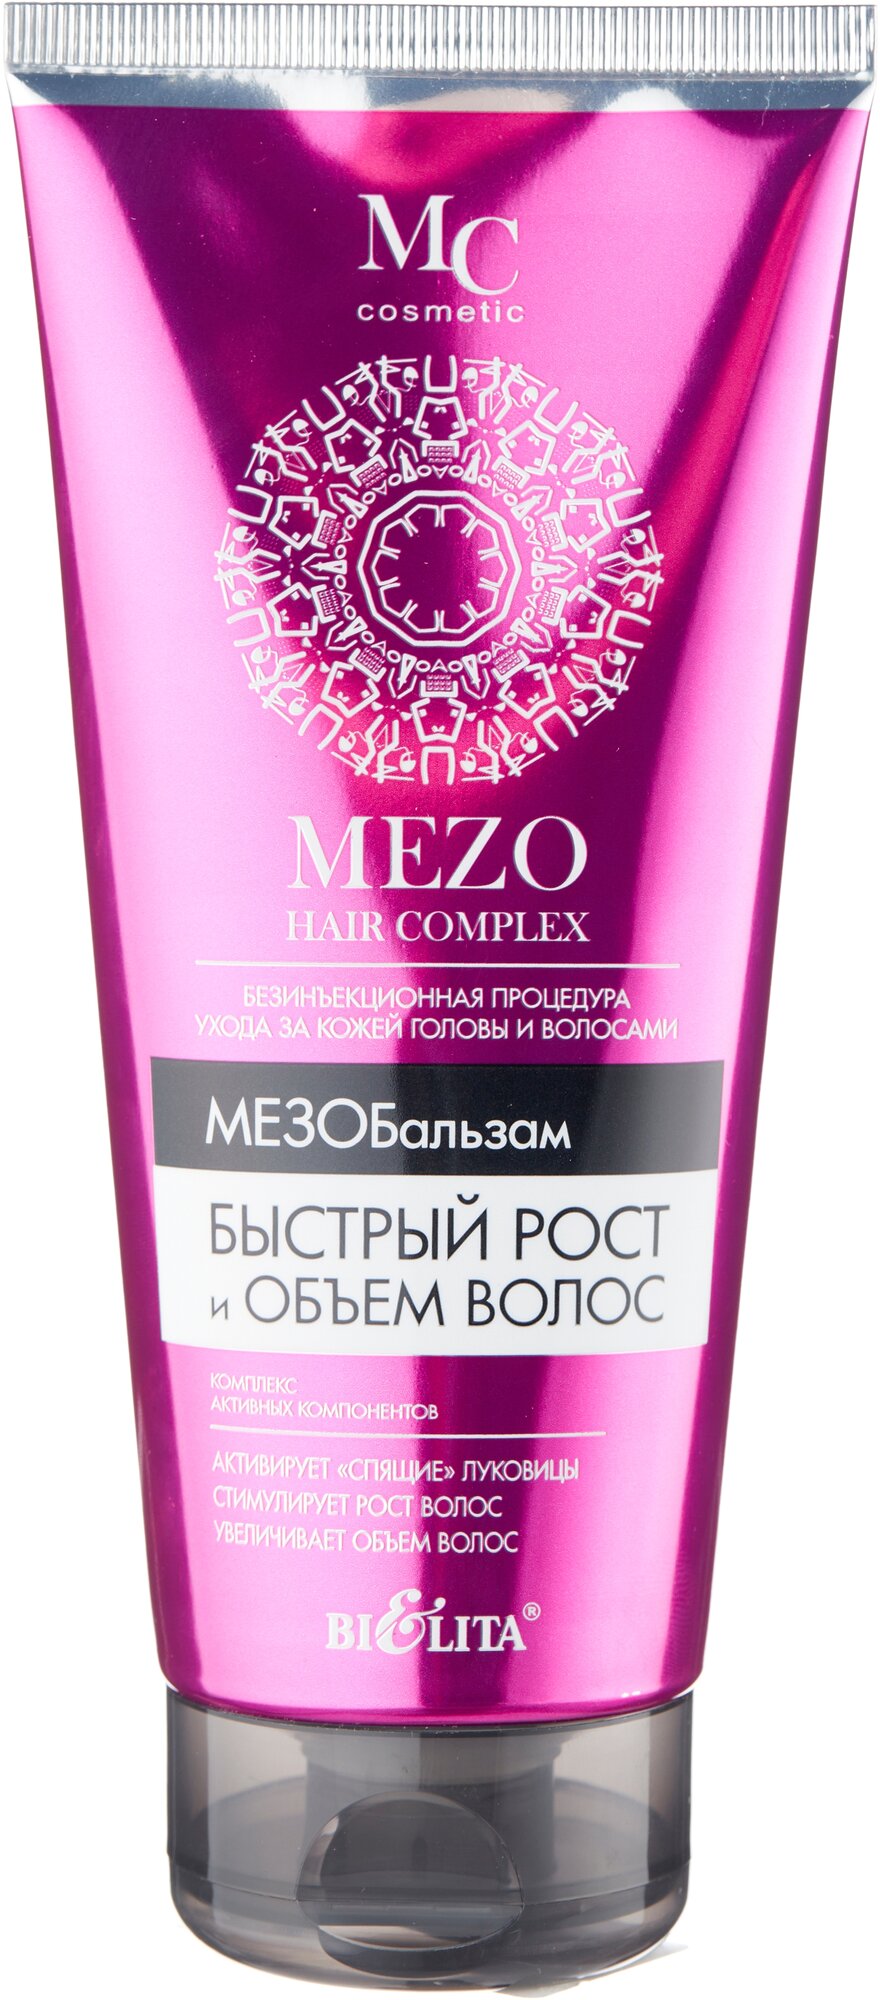 Bielita мезобальзам MC cosmetic Mezo hair complex Быстрый рост и объем волос, 200 мл